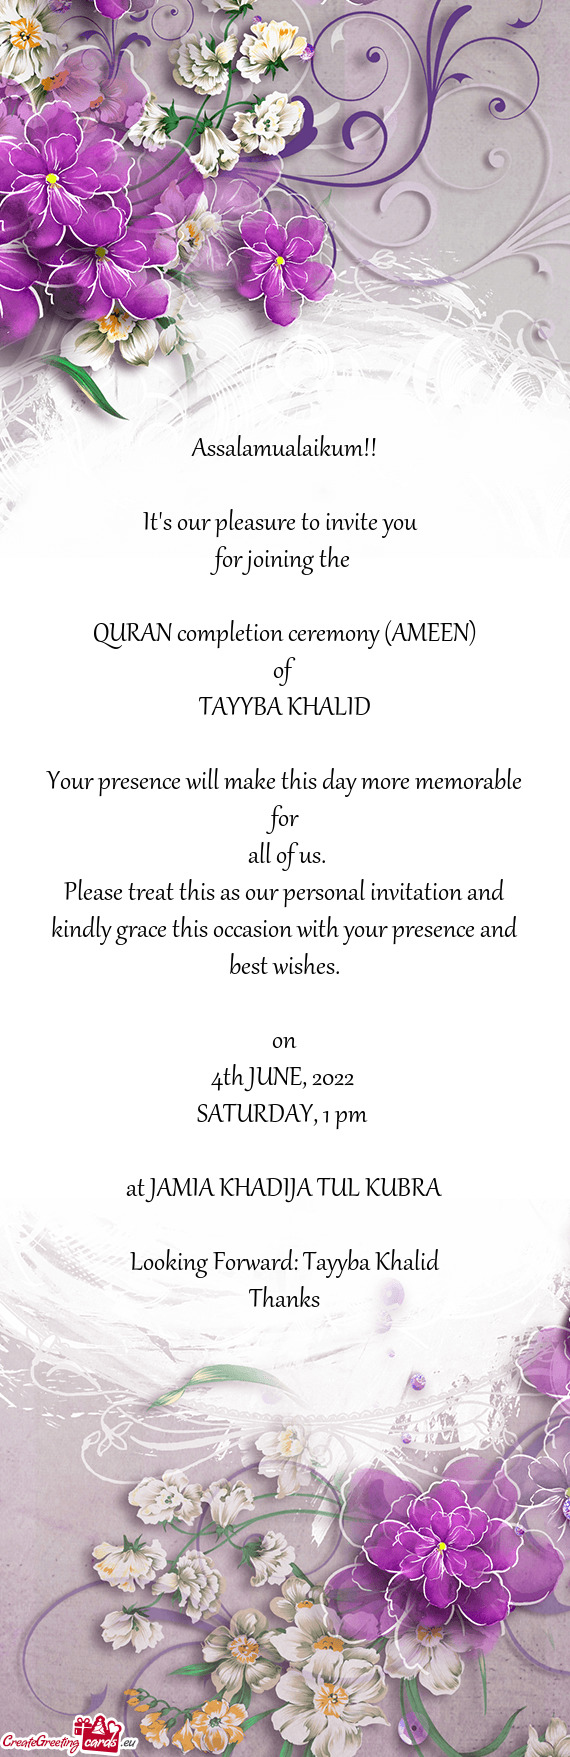 QURAN completion ceremony (AMEEN)